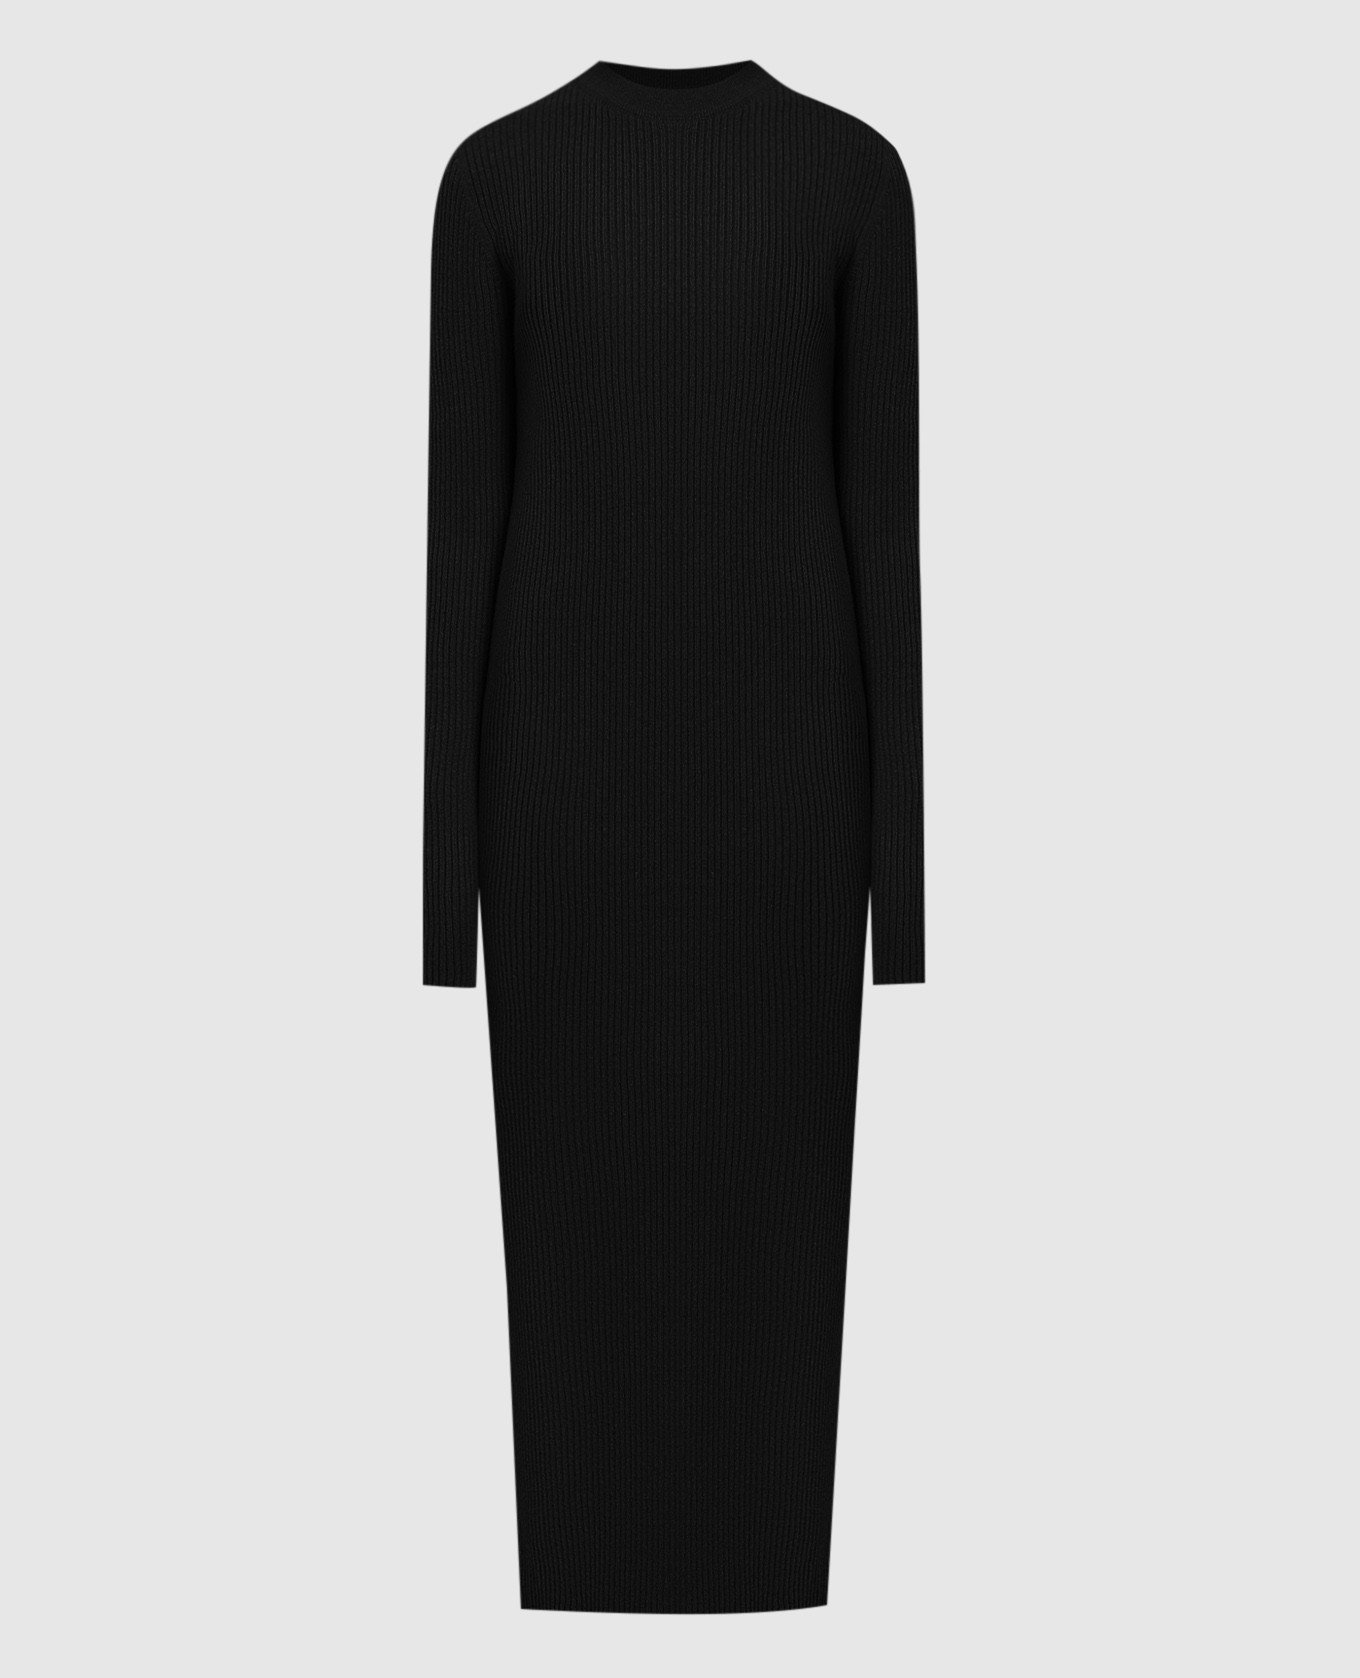 Black cashmere dress with a rib